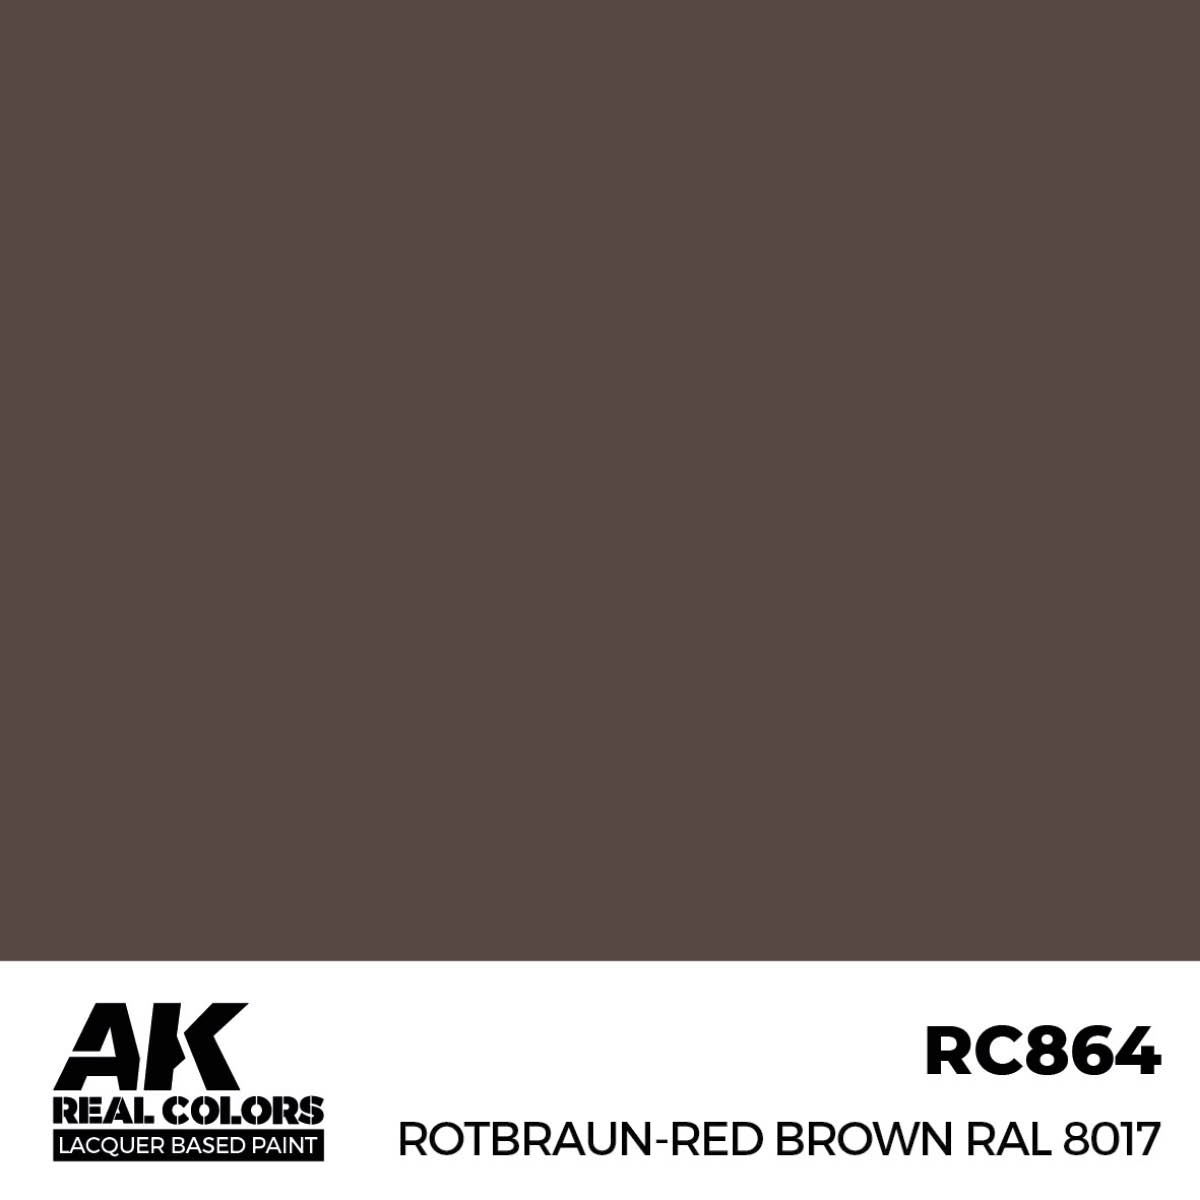 Rotbraun-Red Brown RAL 8017